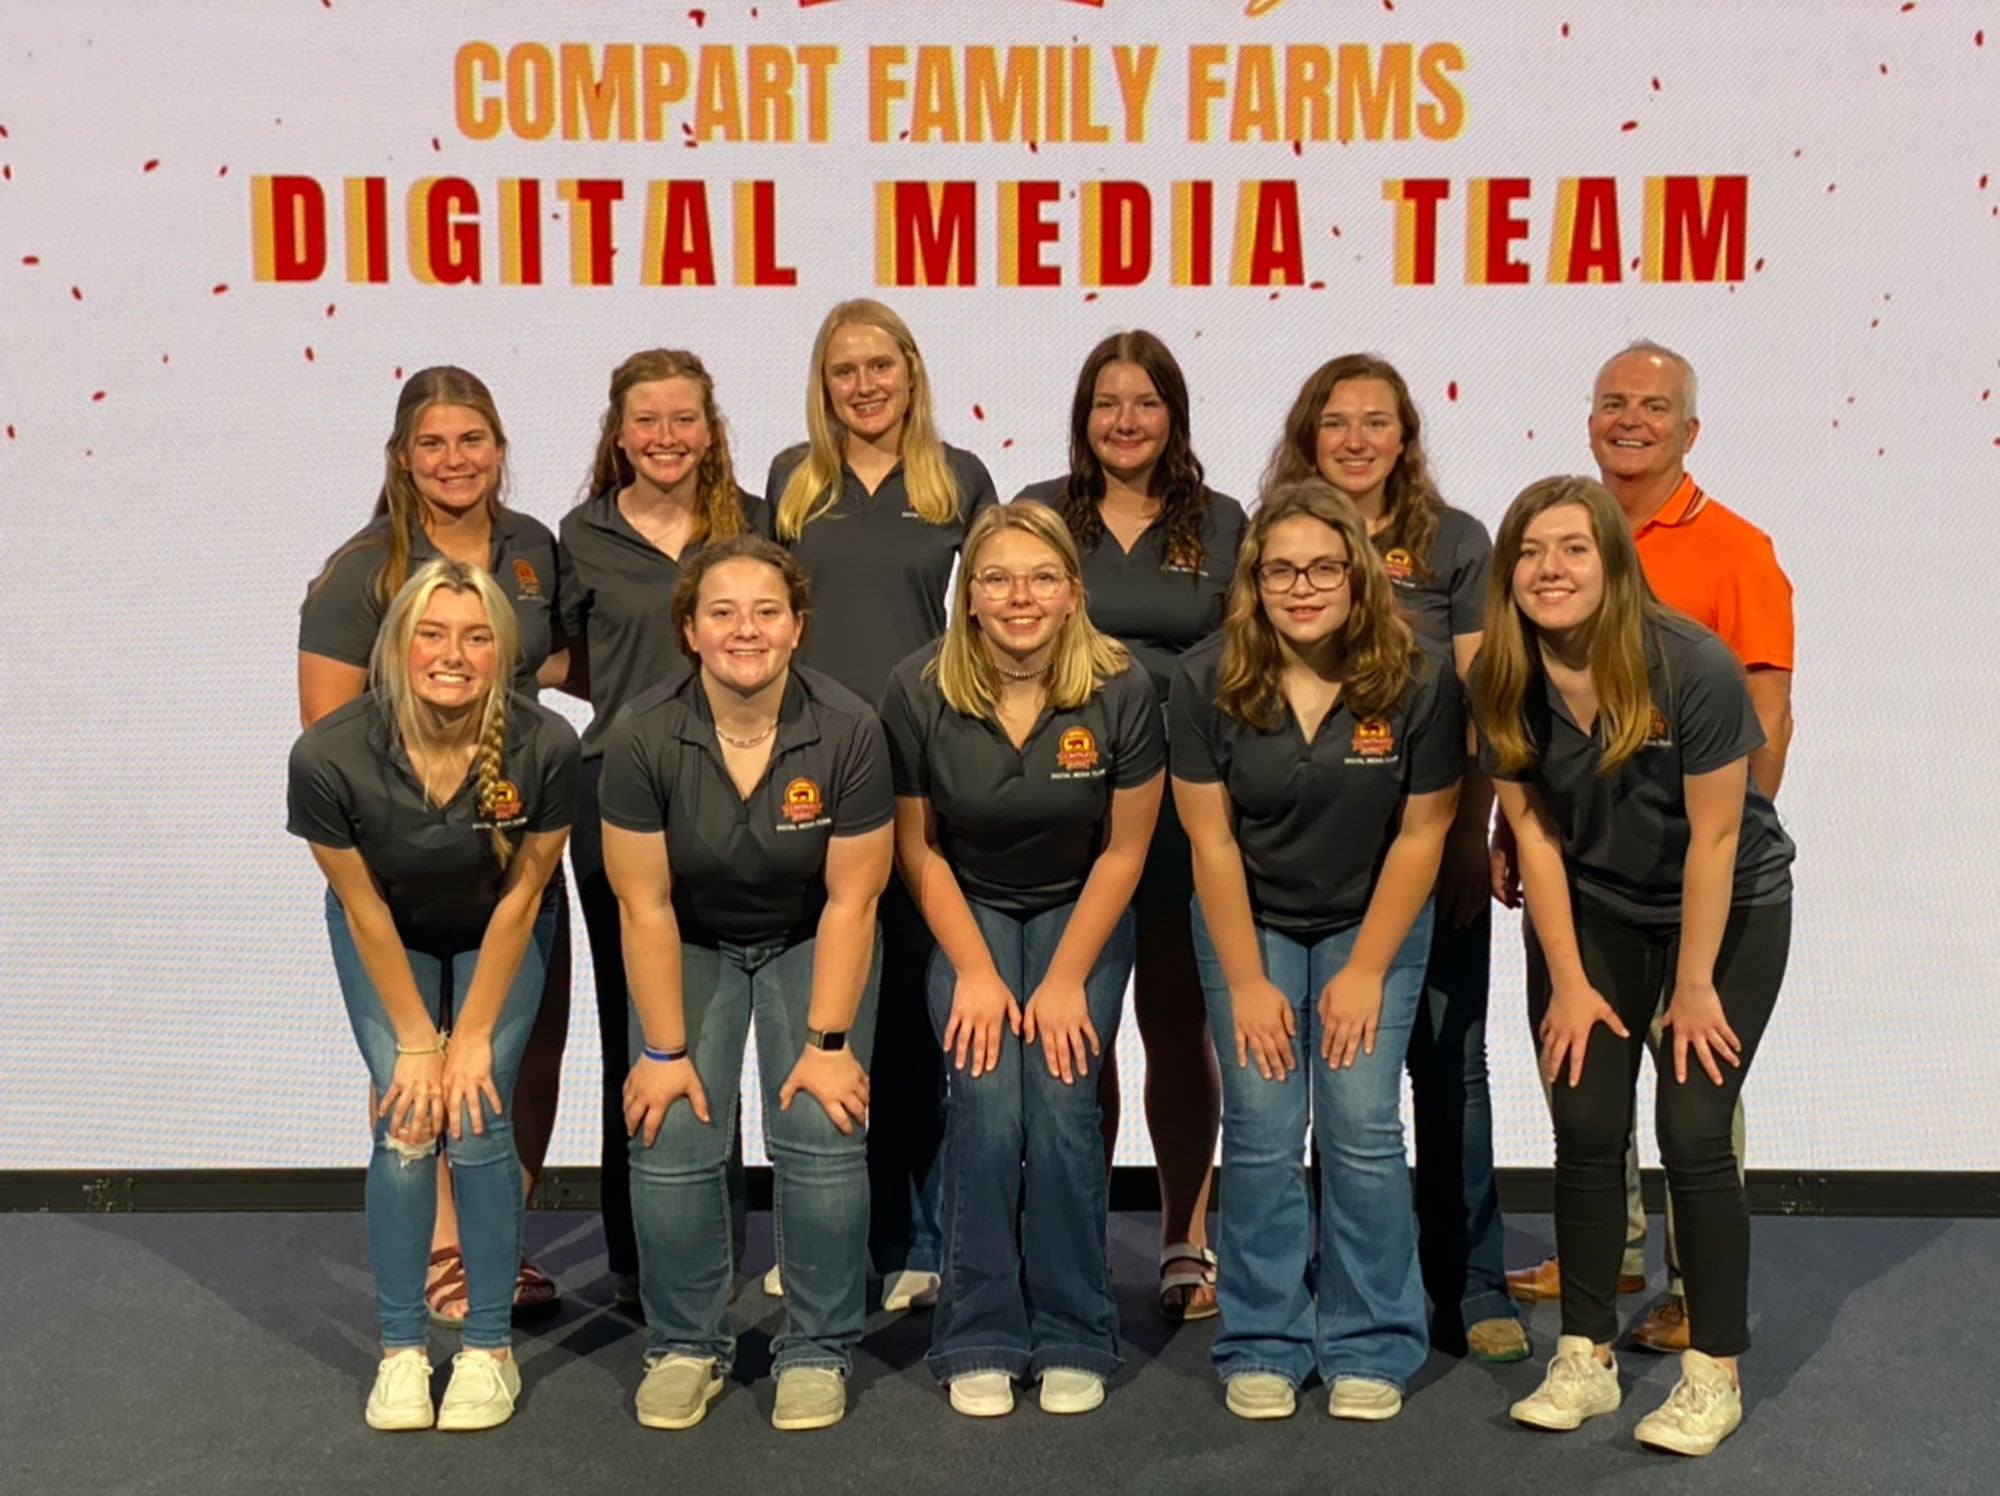 2021 Compart Family Farms Digital Media Team